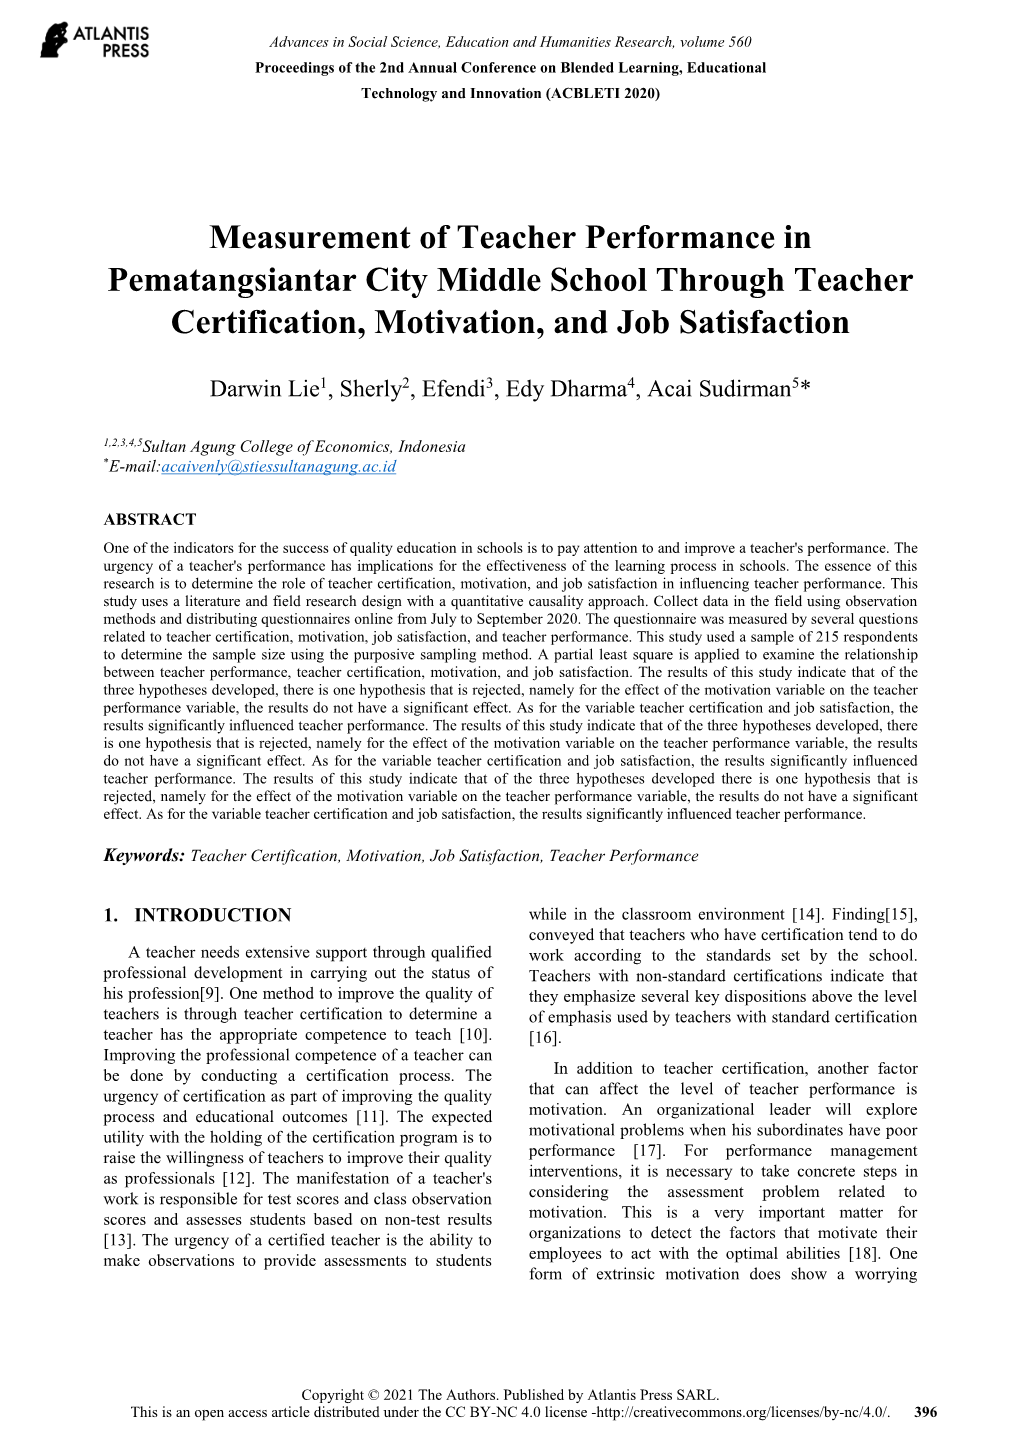 Measurement of Teacher Performance in Pematangsiantar City Middle School Through Teacher Certification, Motivation, and Job Satisfaction